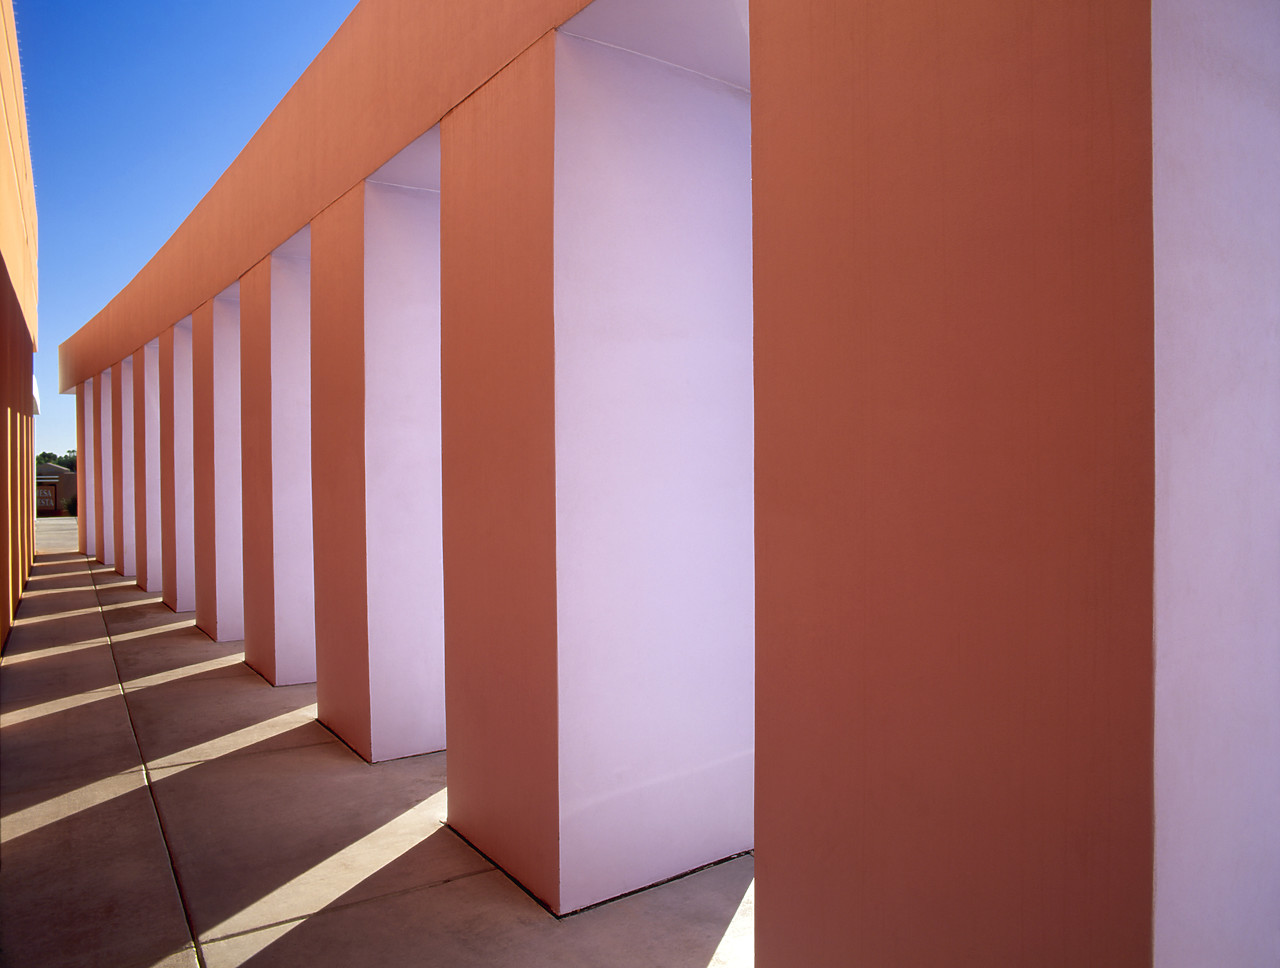 #981026-1 - Building Columns & Shadows, Phoenix, Arizona, USA